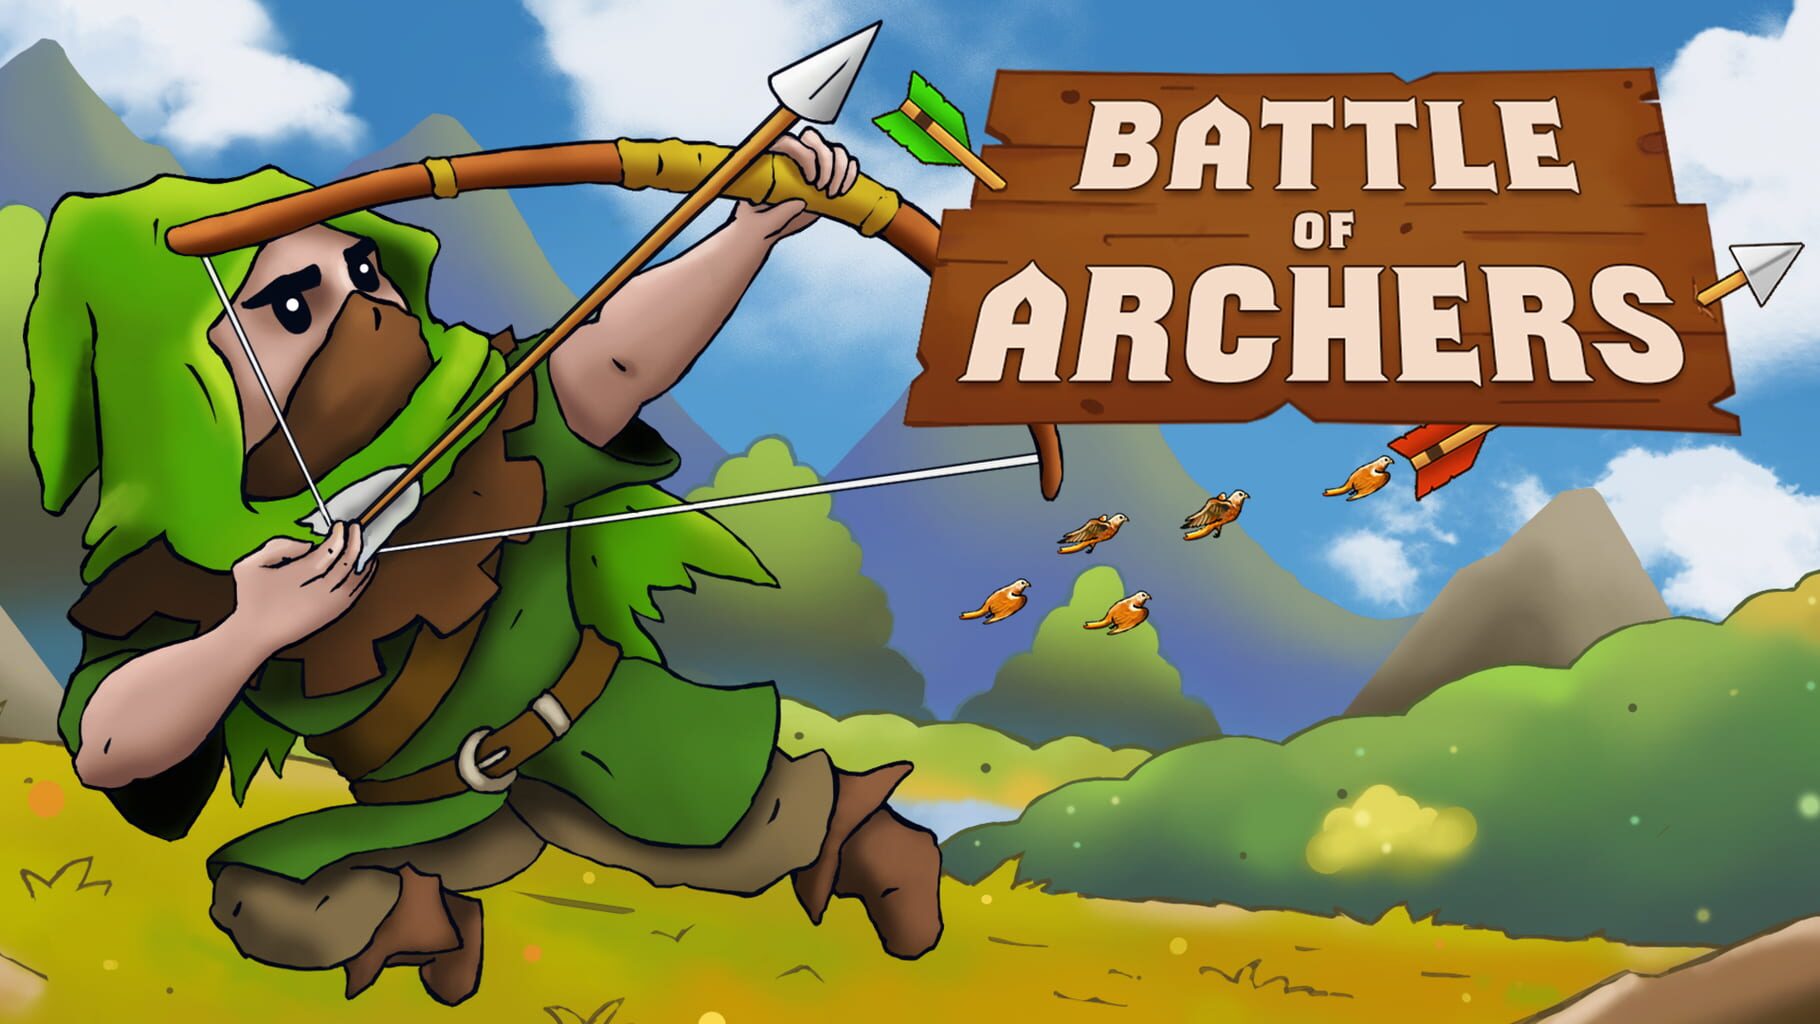 Battle of Archers artwork